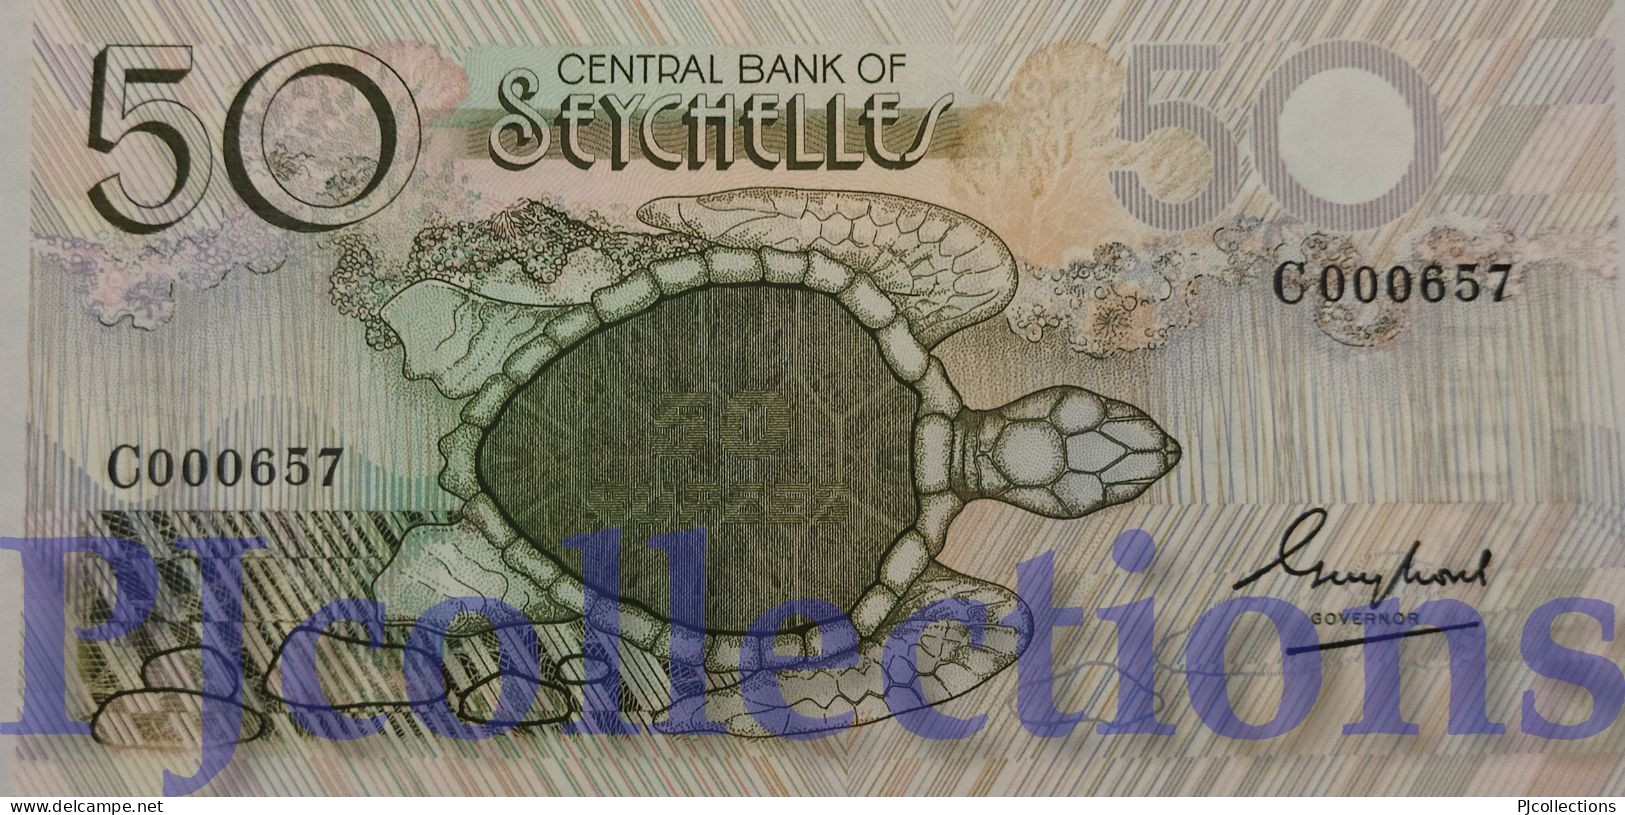 SEYCHELLES 50 RUPEES 1983 PICK 30 UNC LOW SERIAL NUMBER "C 000657" - Seychelles